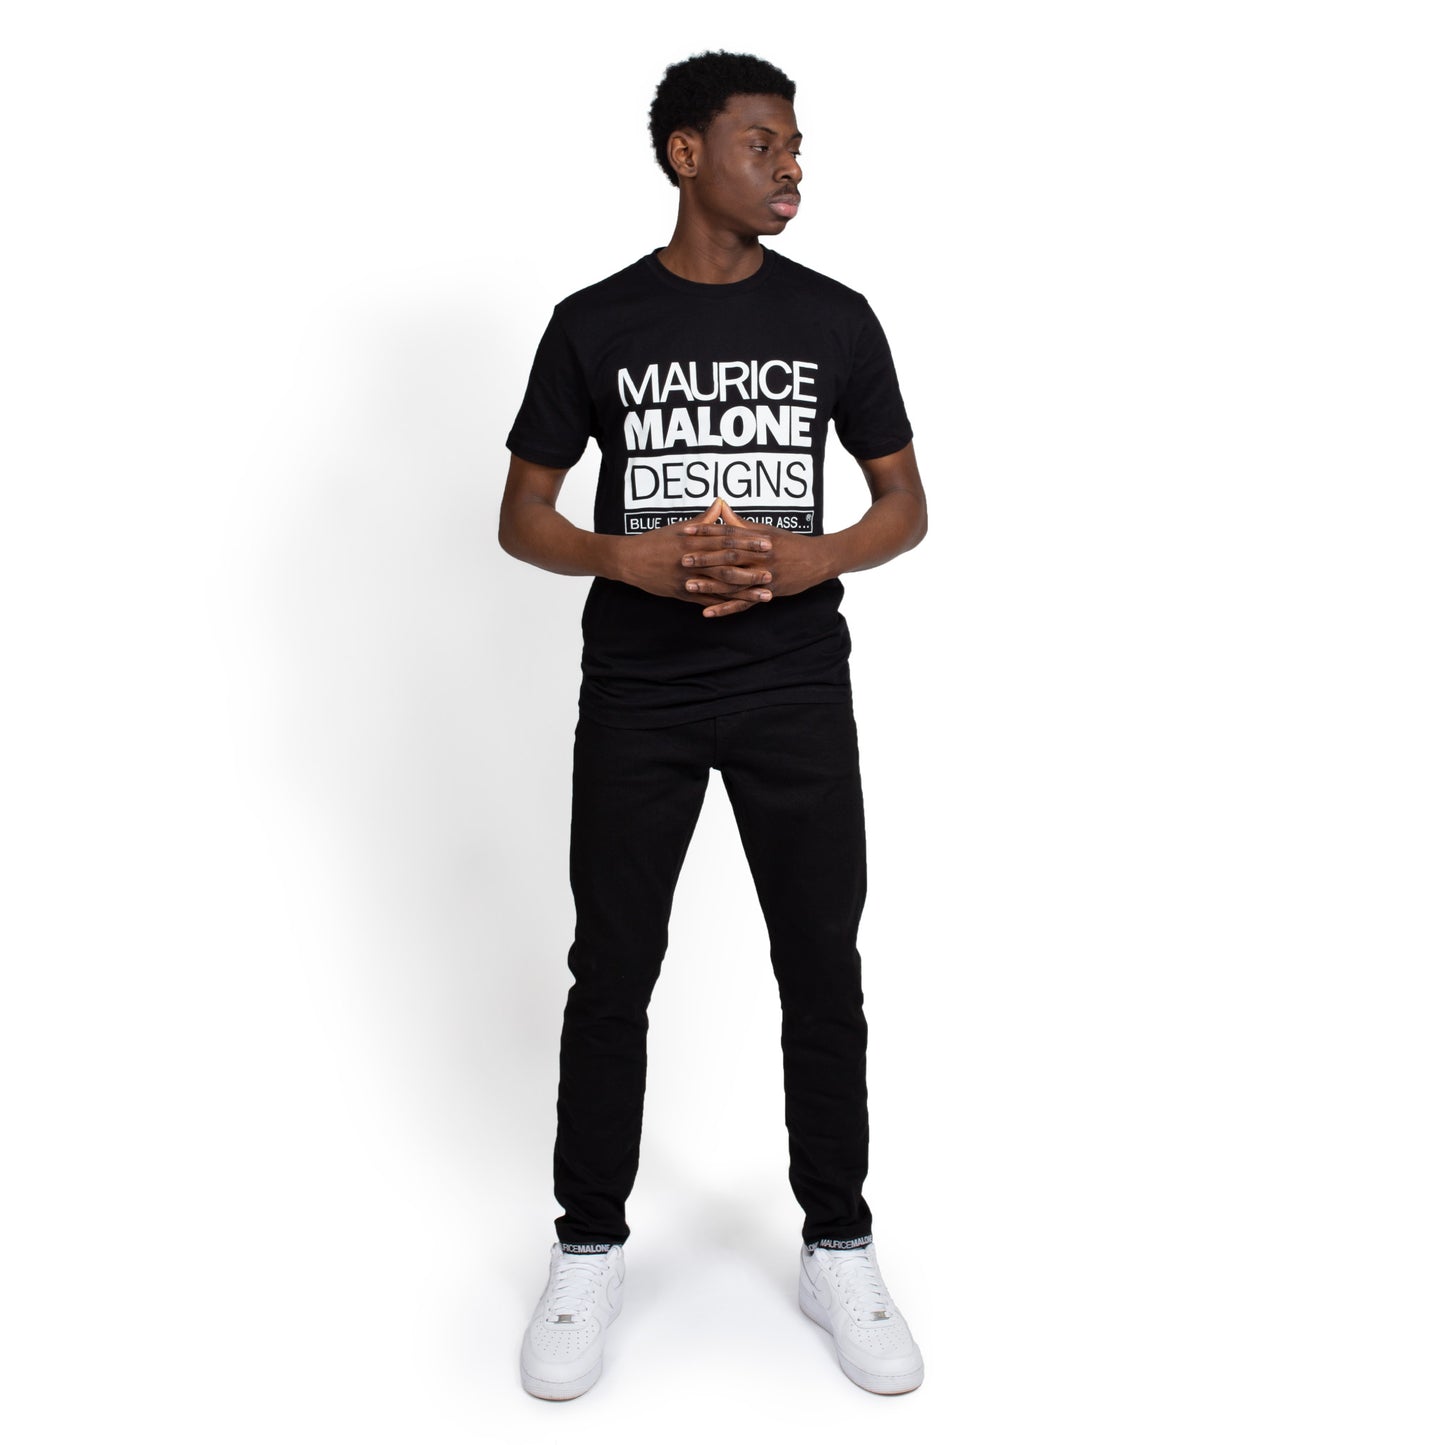 Maurice Malone black skinny jeans with logo hem branding & t-shirt worn by model Ottihh